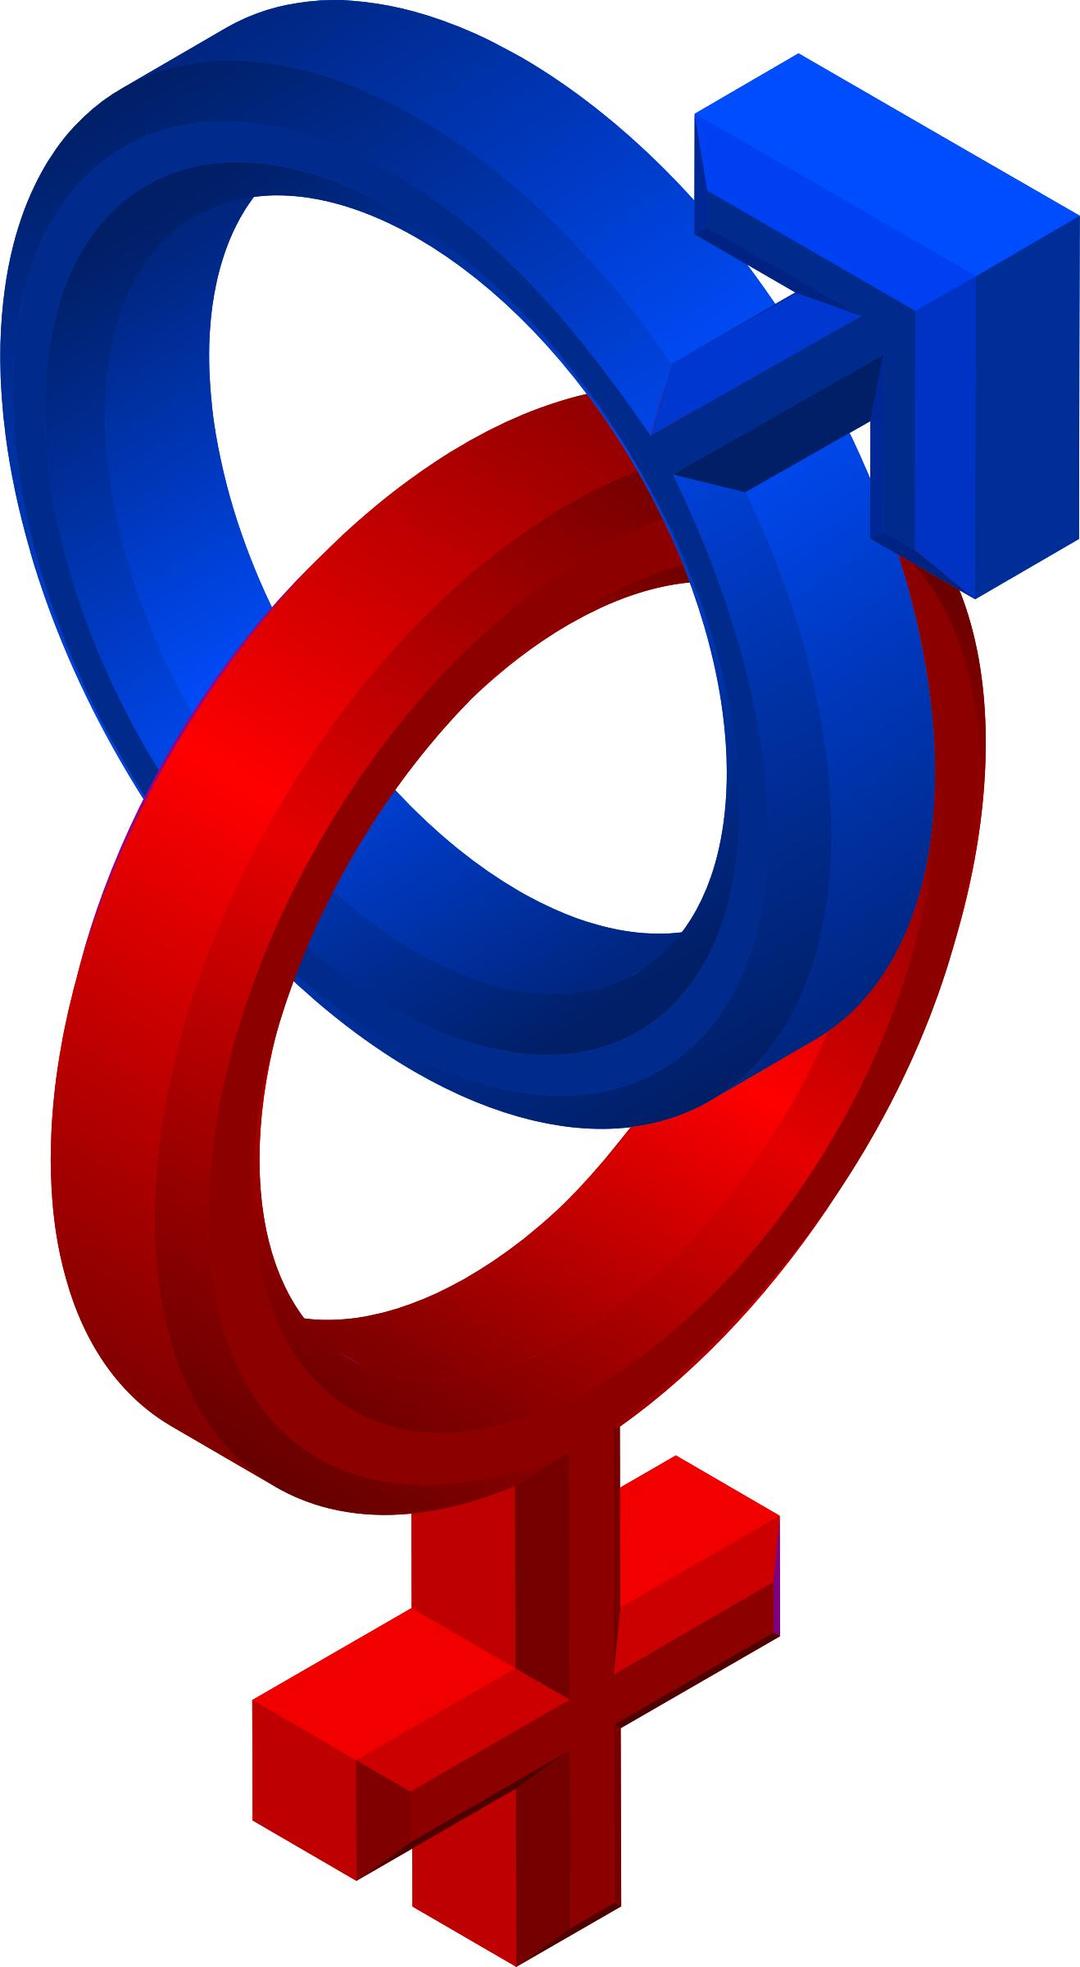 Male/Female Symbols png transparent